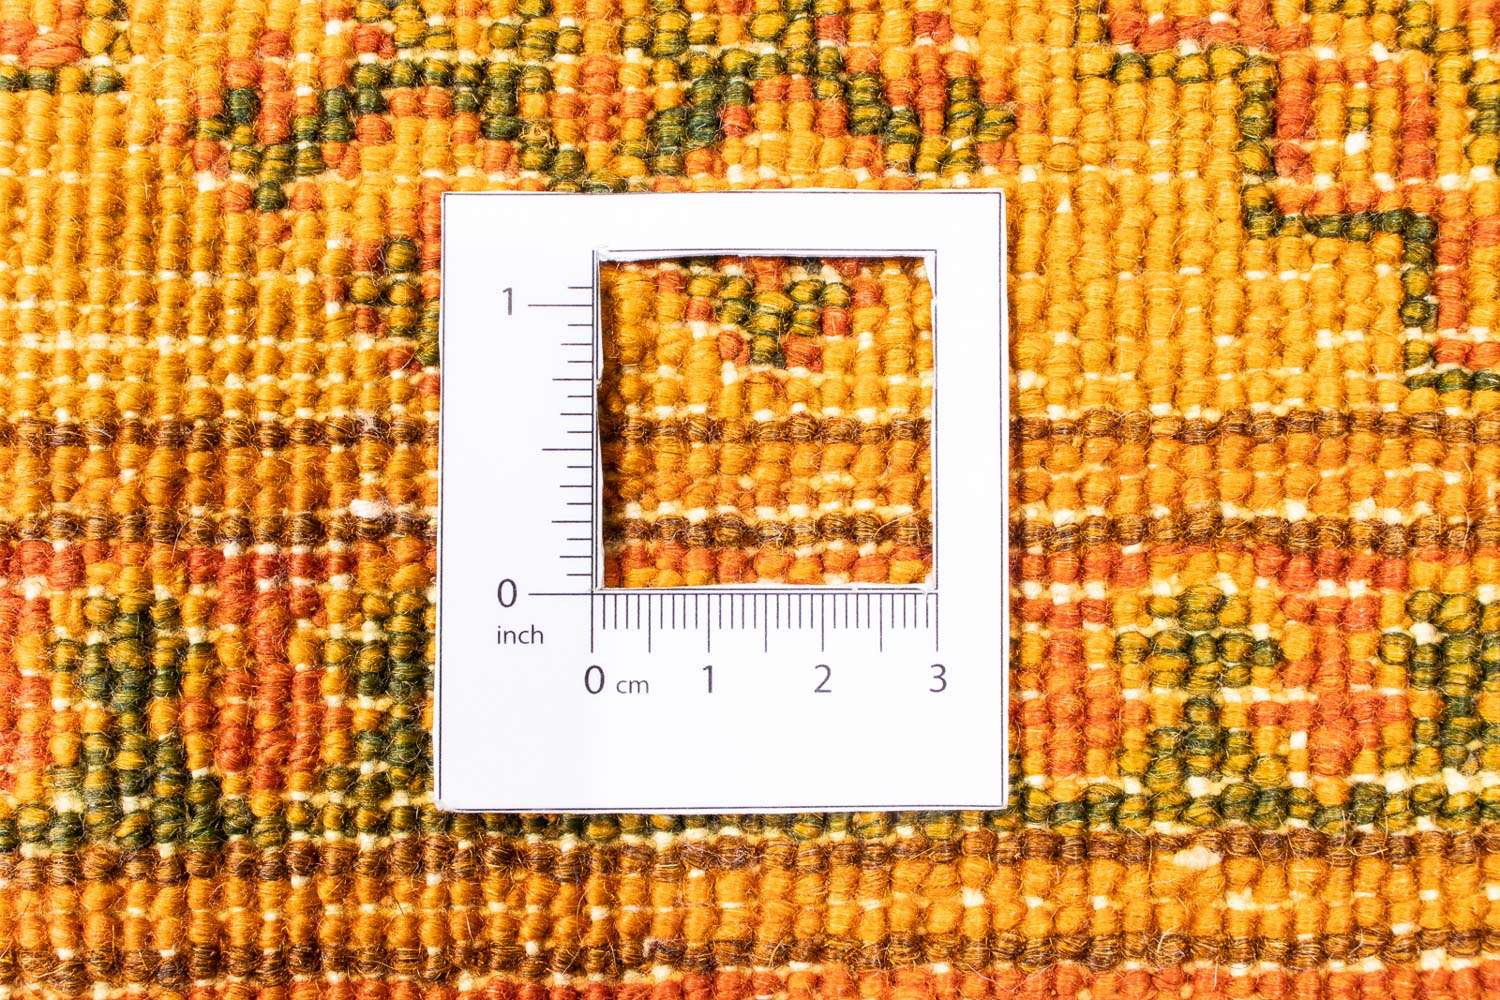 Tapis patchwork - 295 x 239 cm - marron